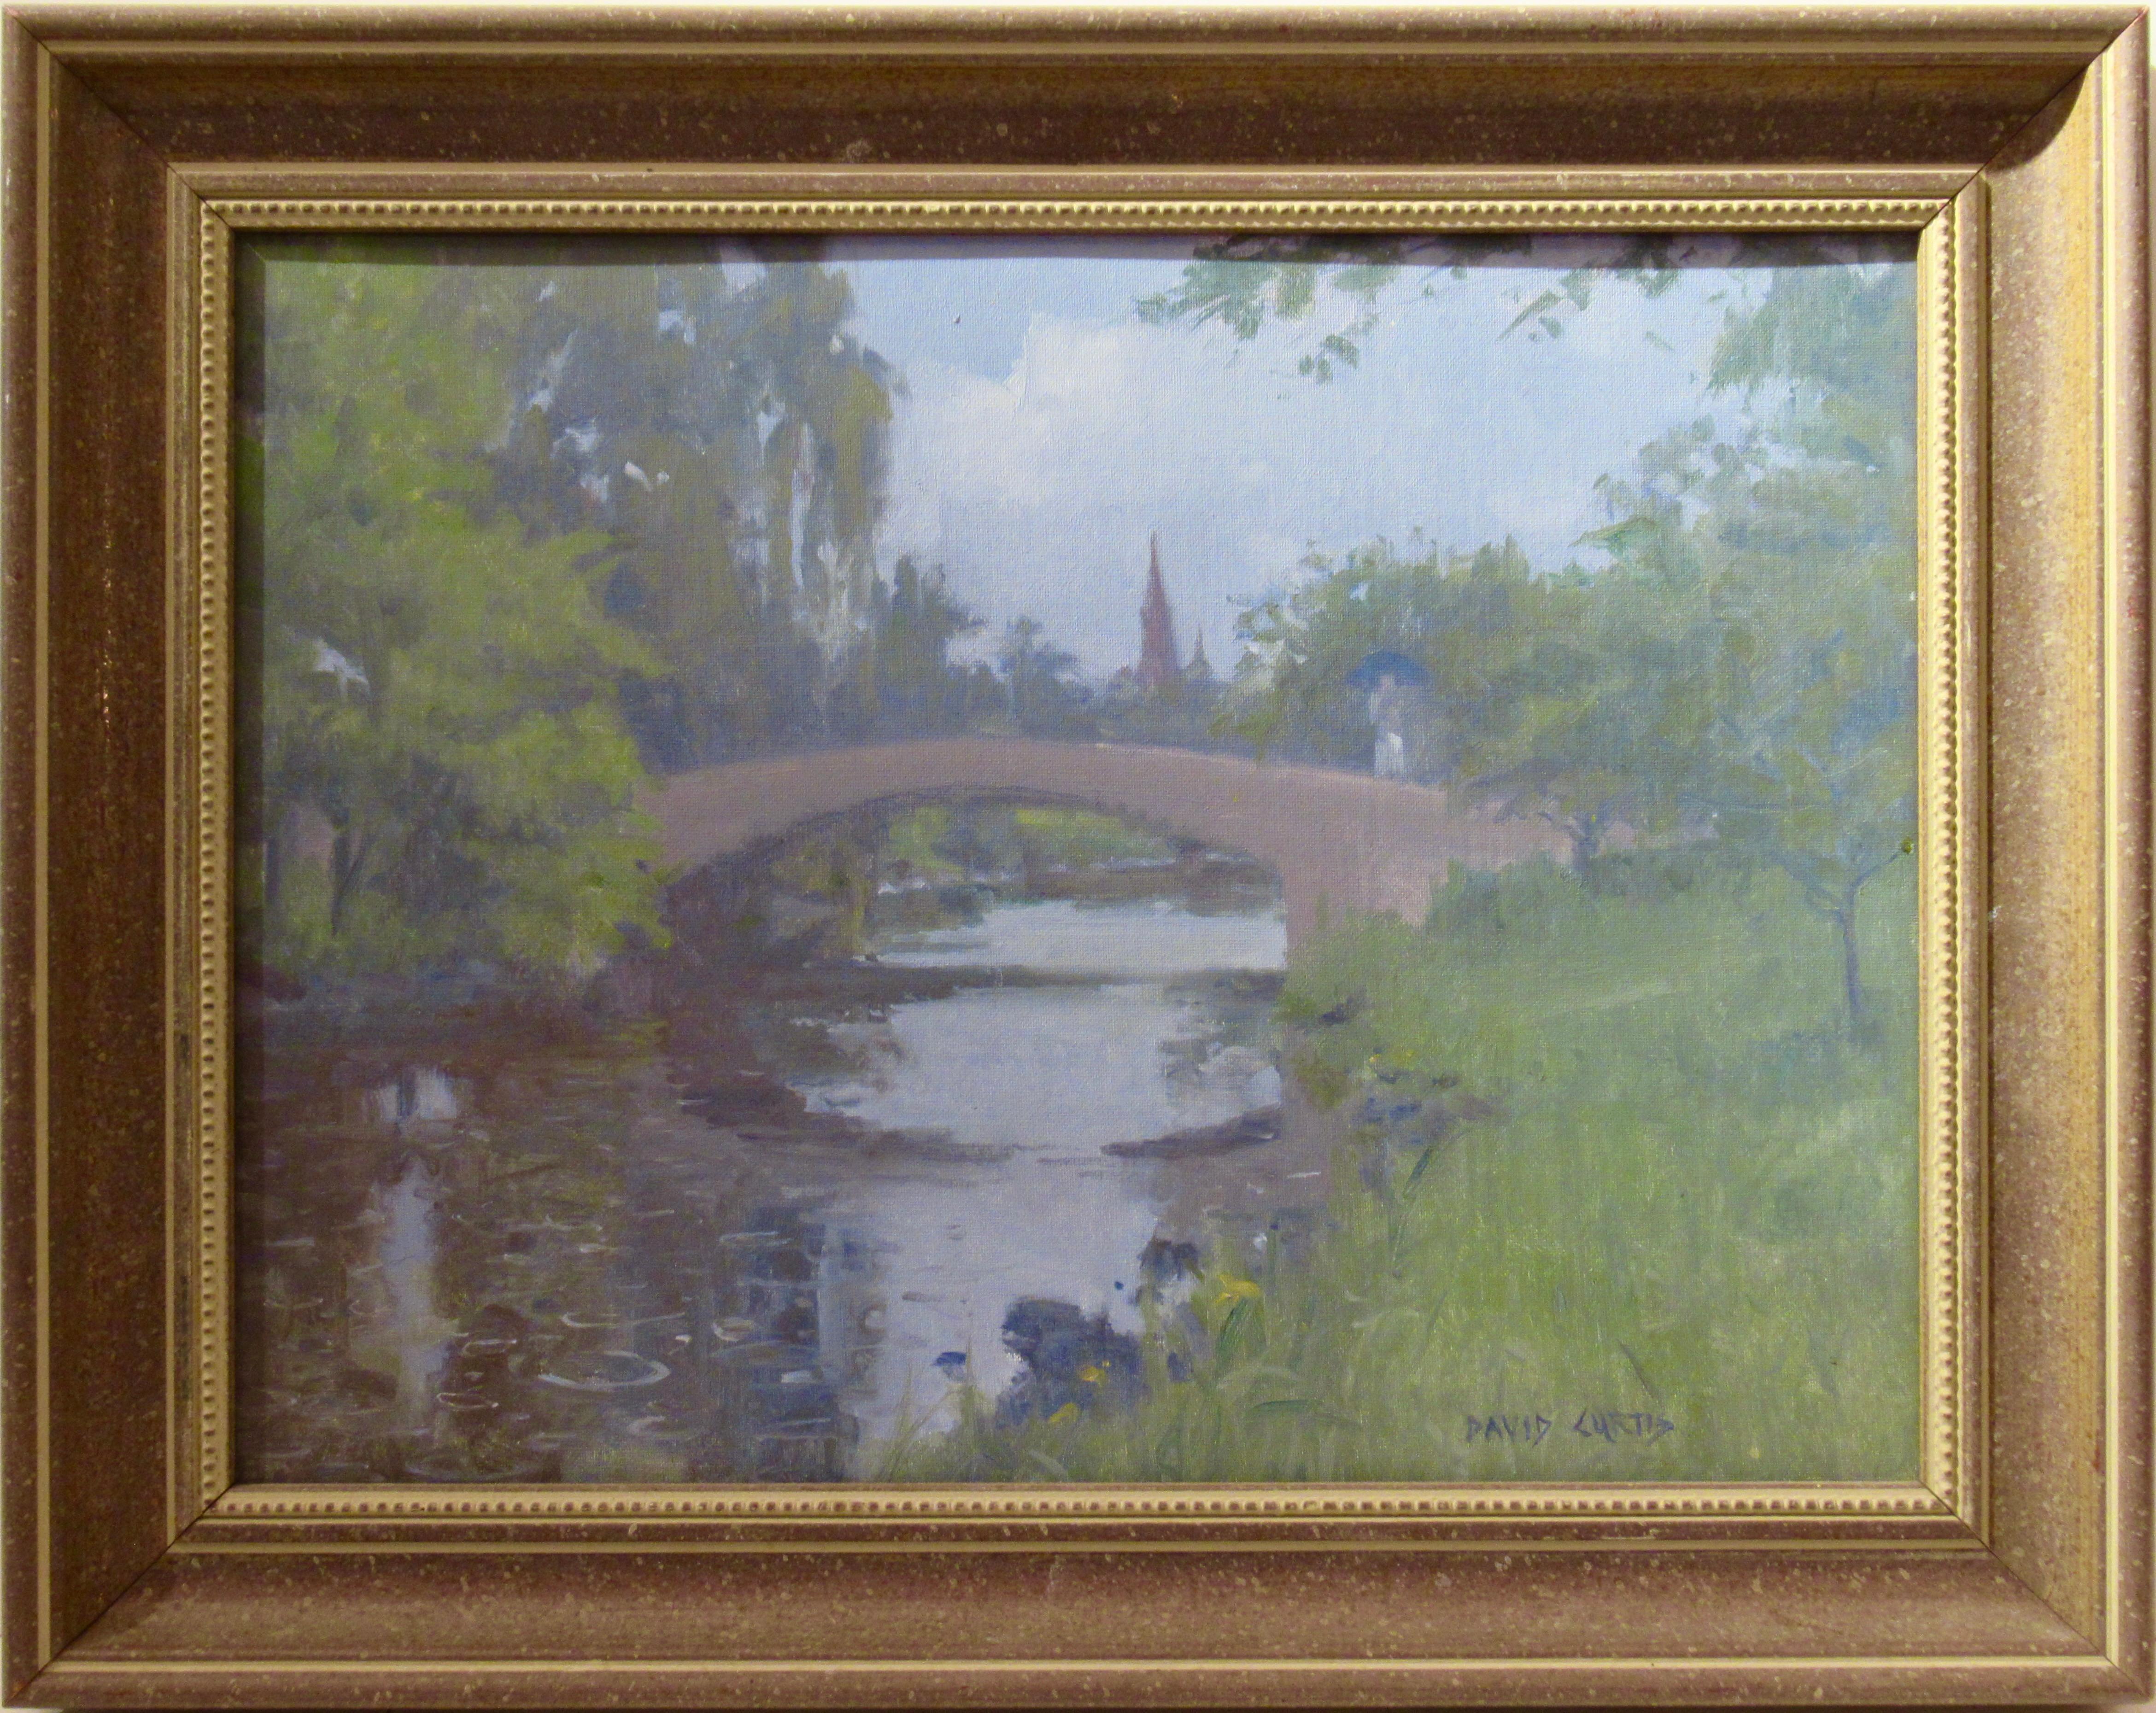 David P. Curtis Figurative Painting - Landscape with Bridge